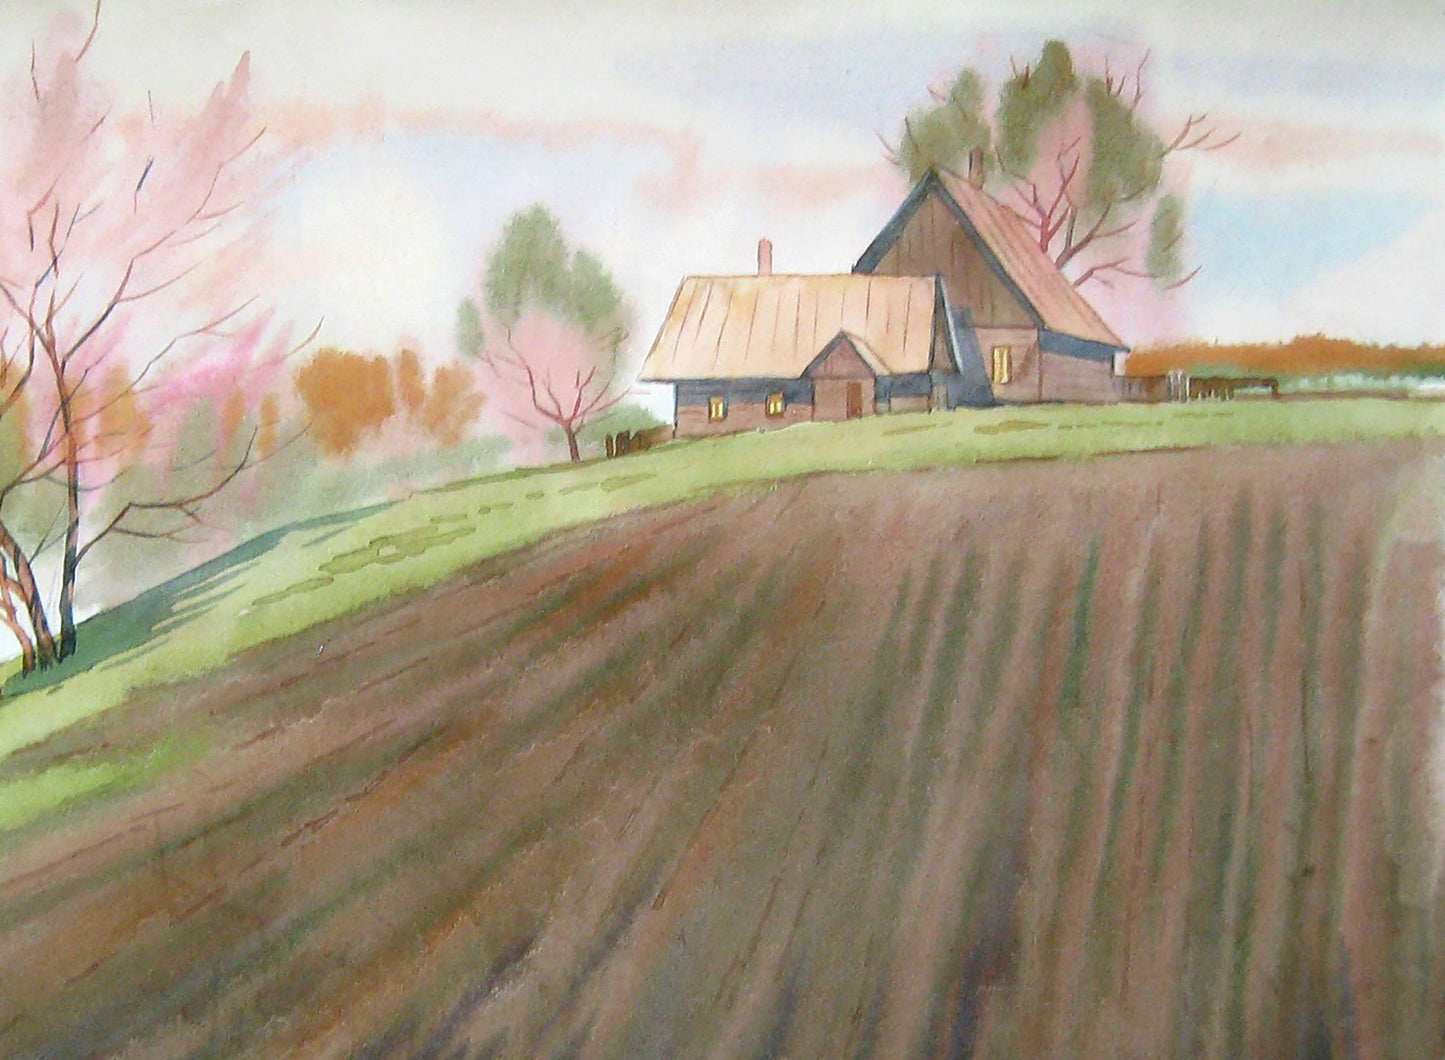 Watercolor painting April Savenets Valery